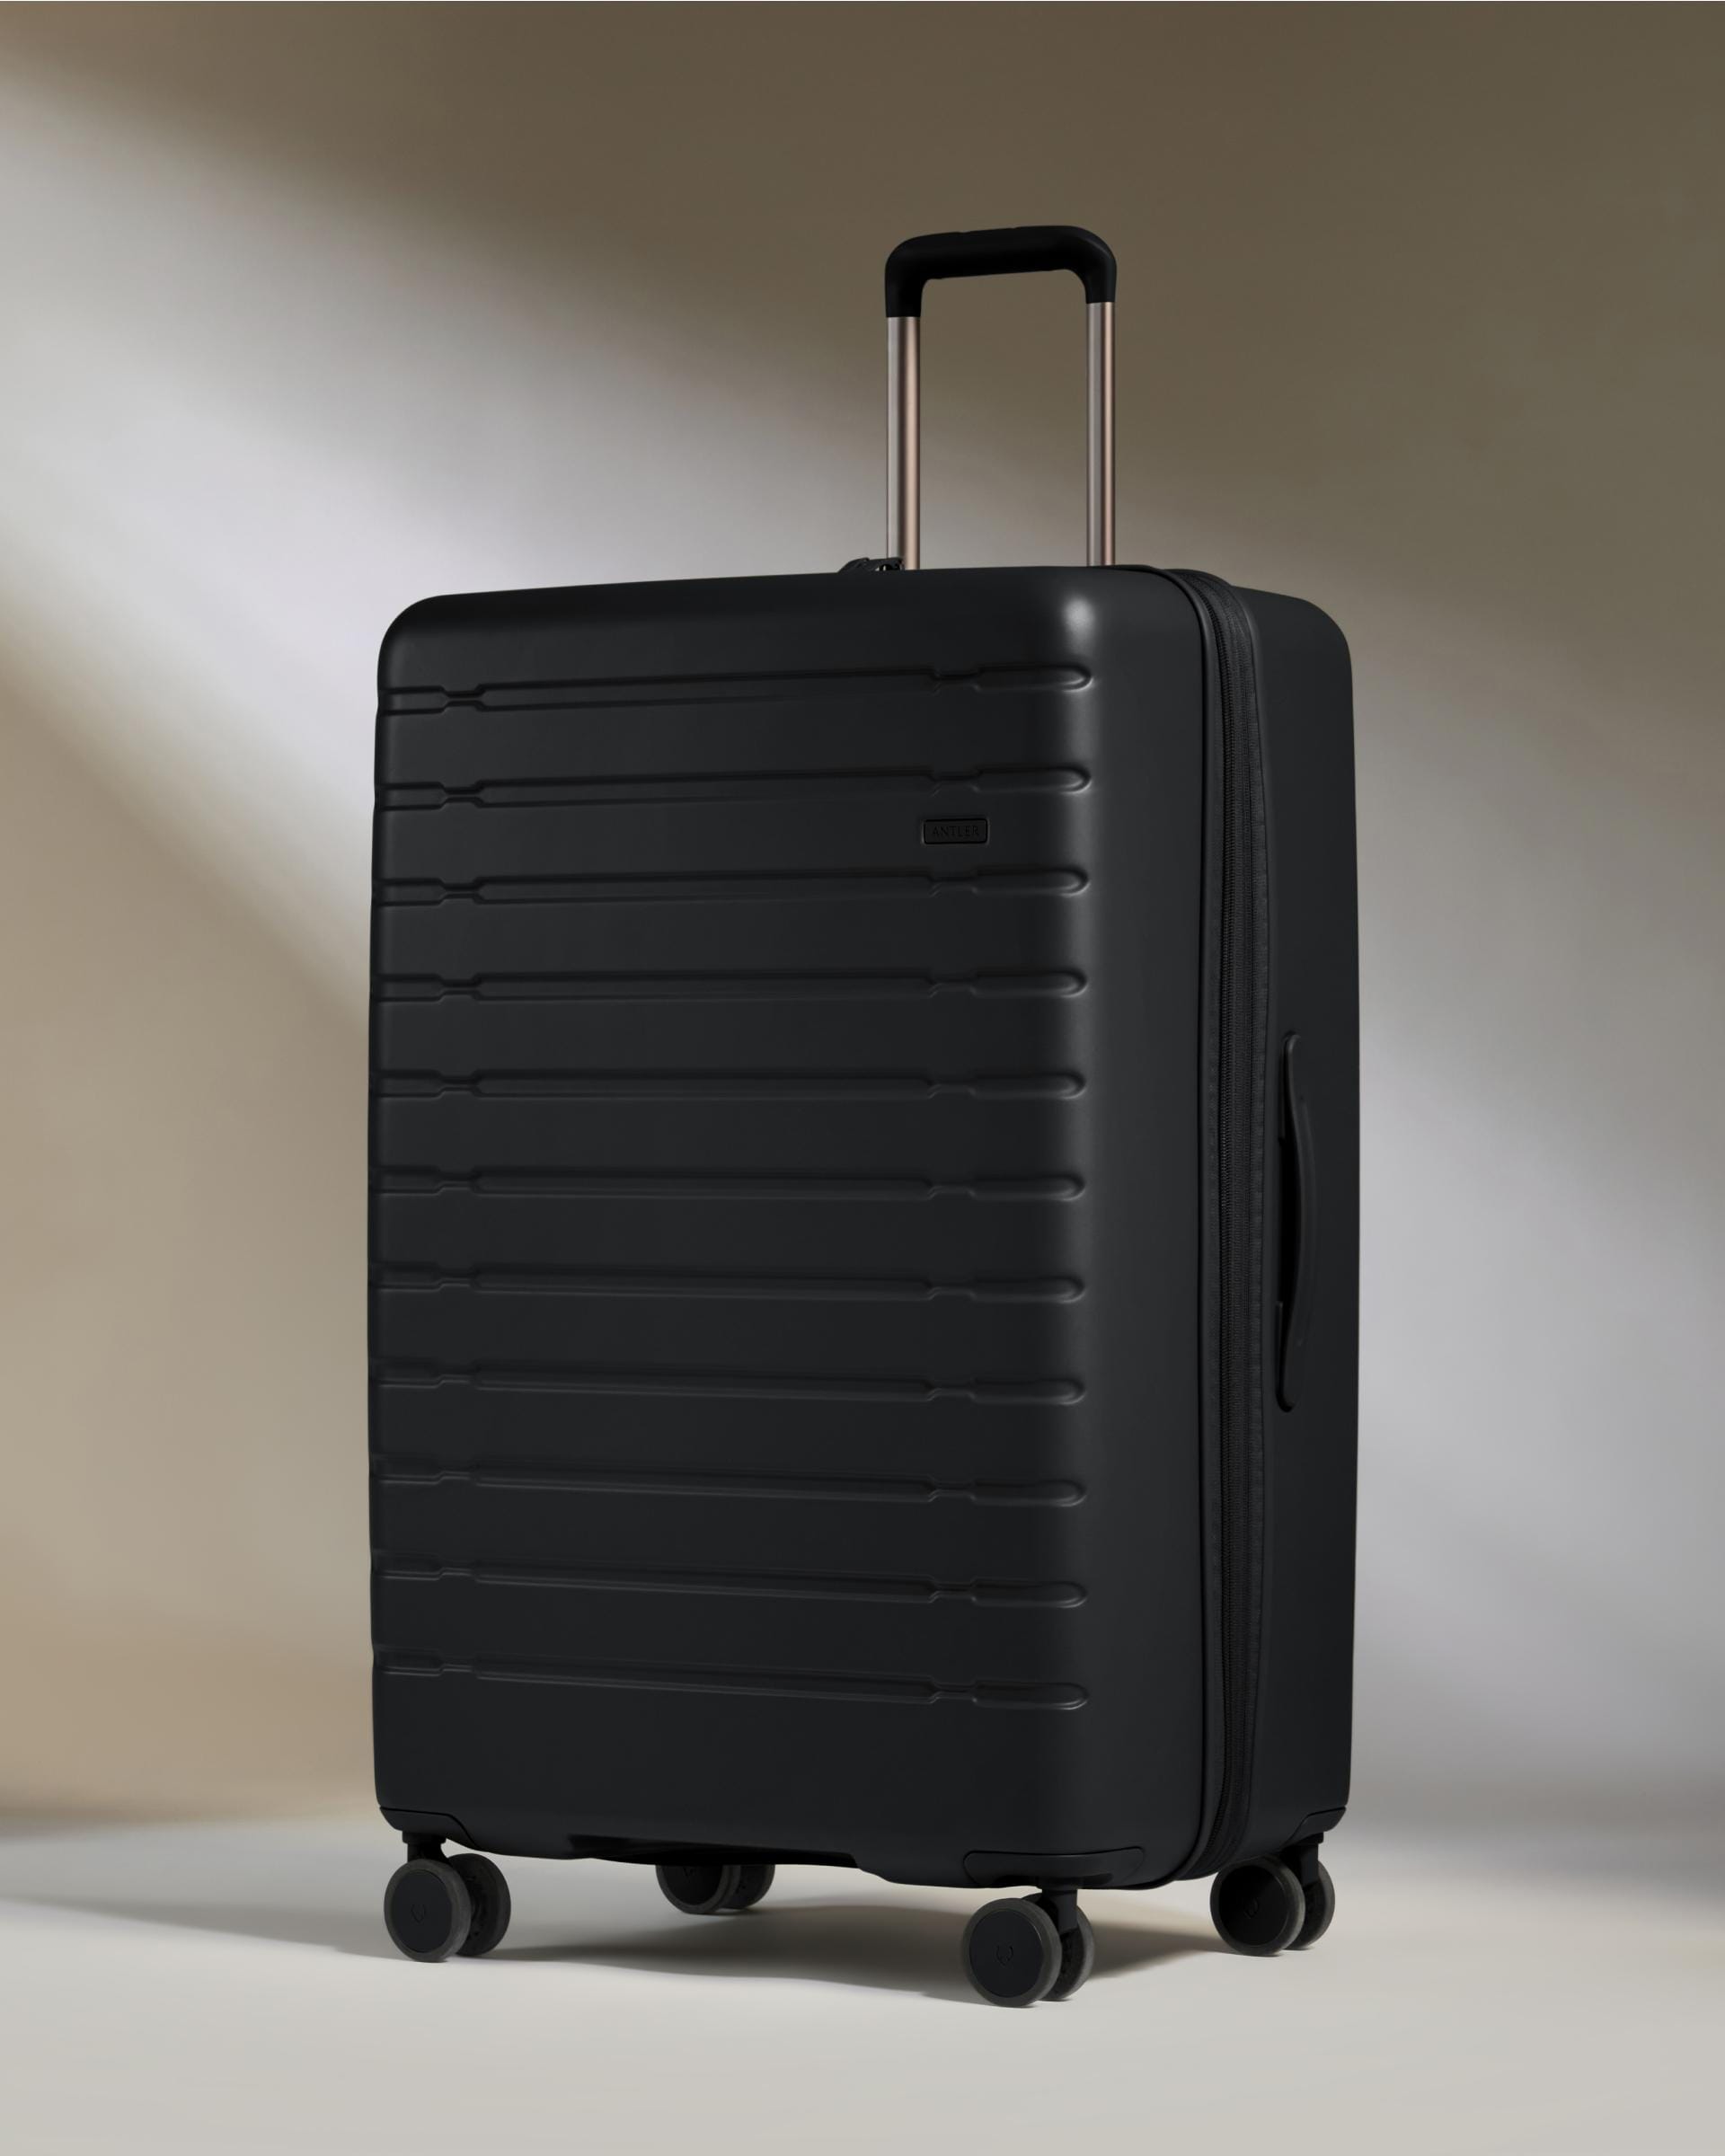 View Antler Stamford 20 Large Suitcase In Midnight Black Size 345cm x 54cm x 815cm information